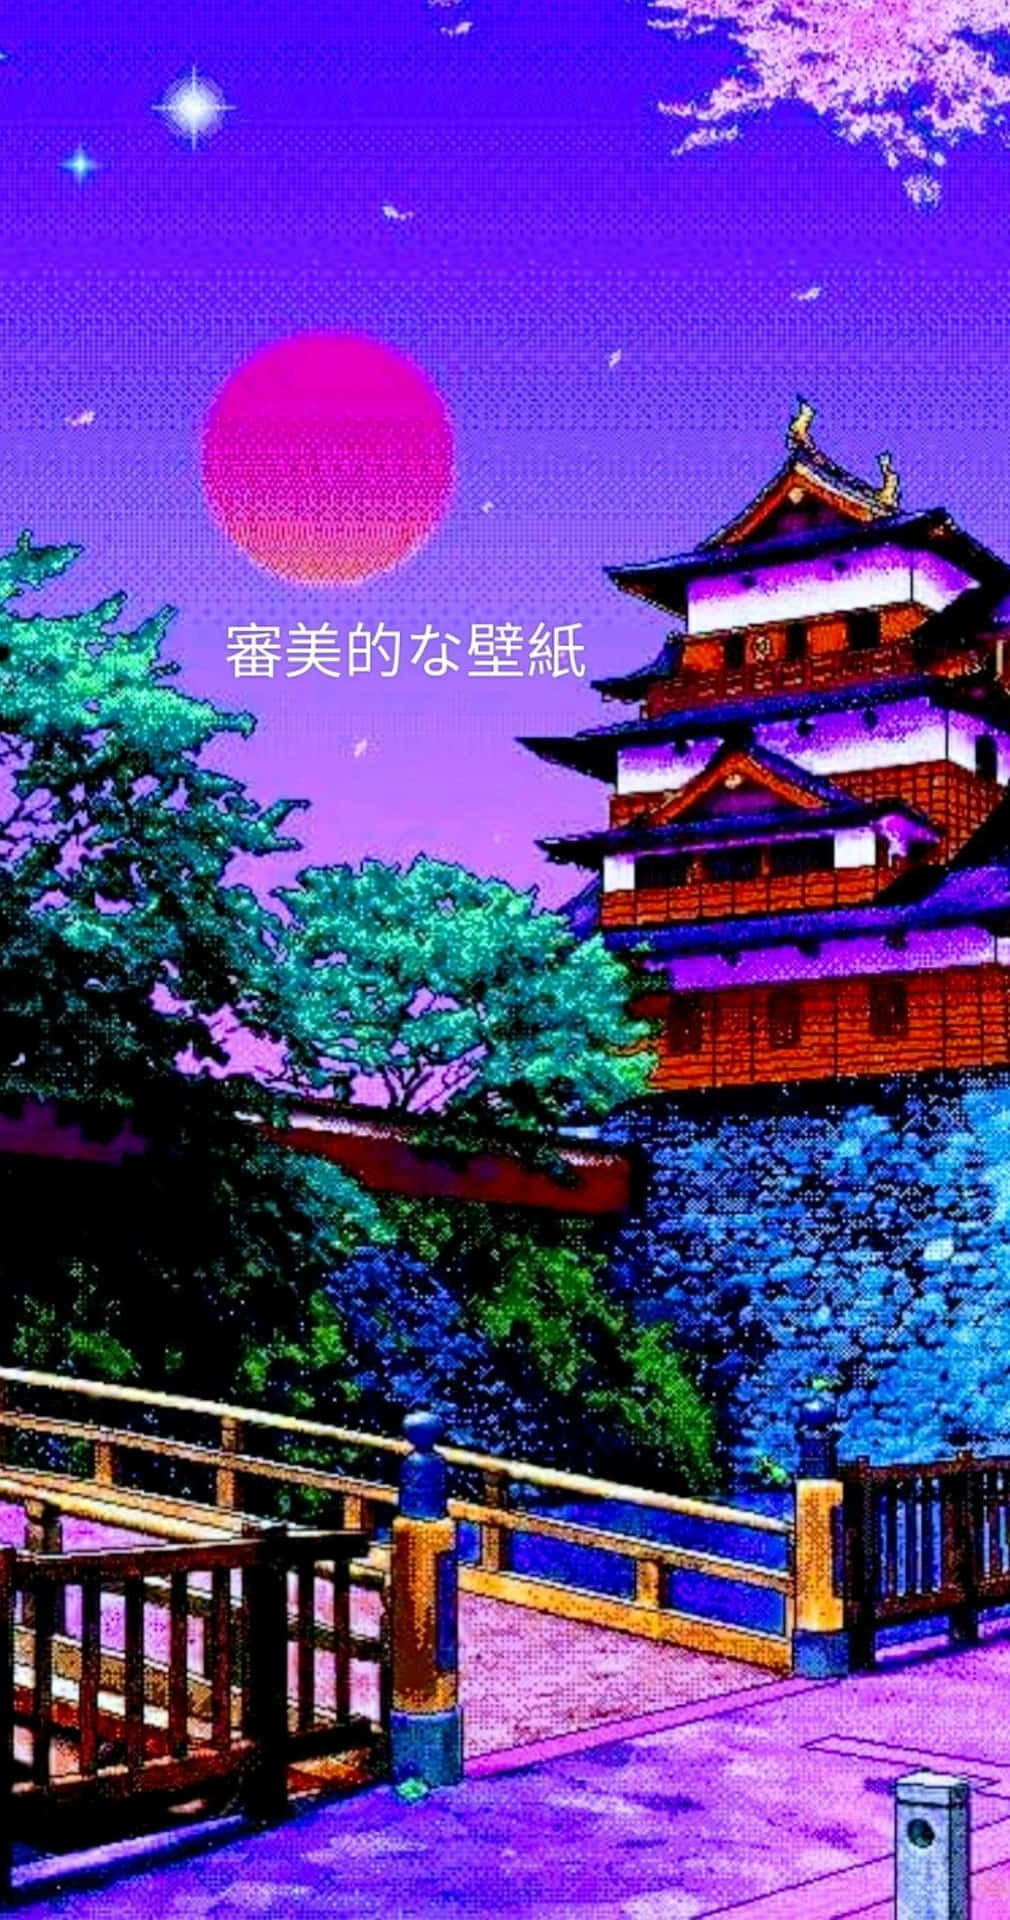 En japansk stil spil med en lilla himmel og et eventyrslot. Wallpaper